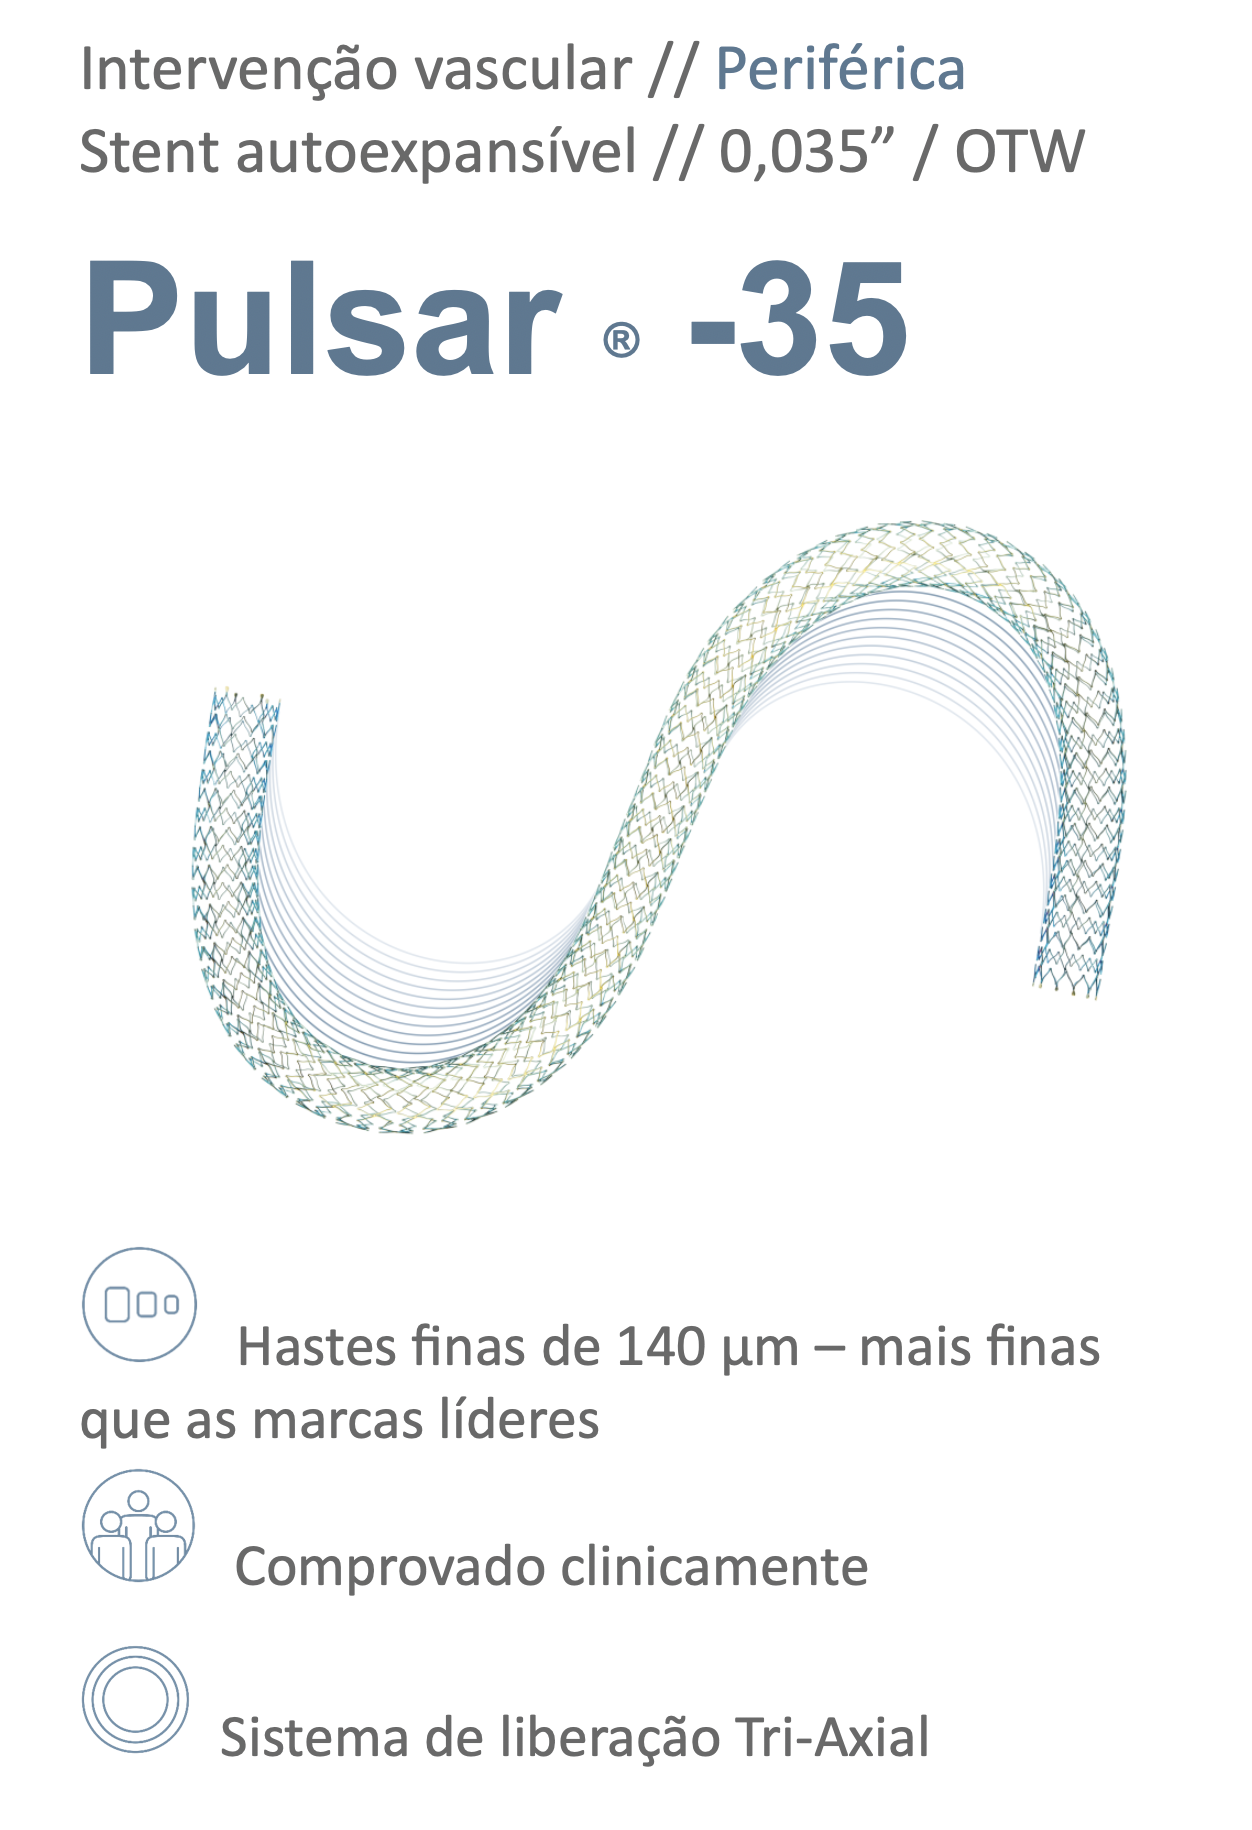 Pulsar-35